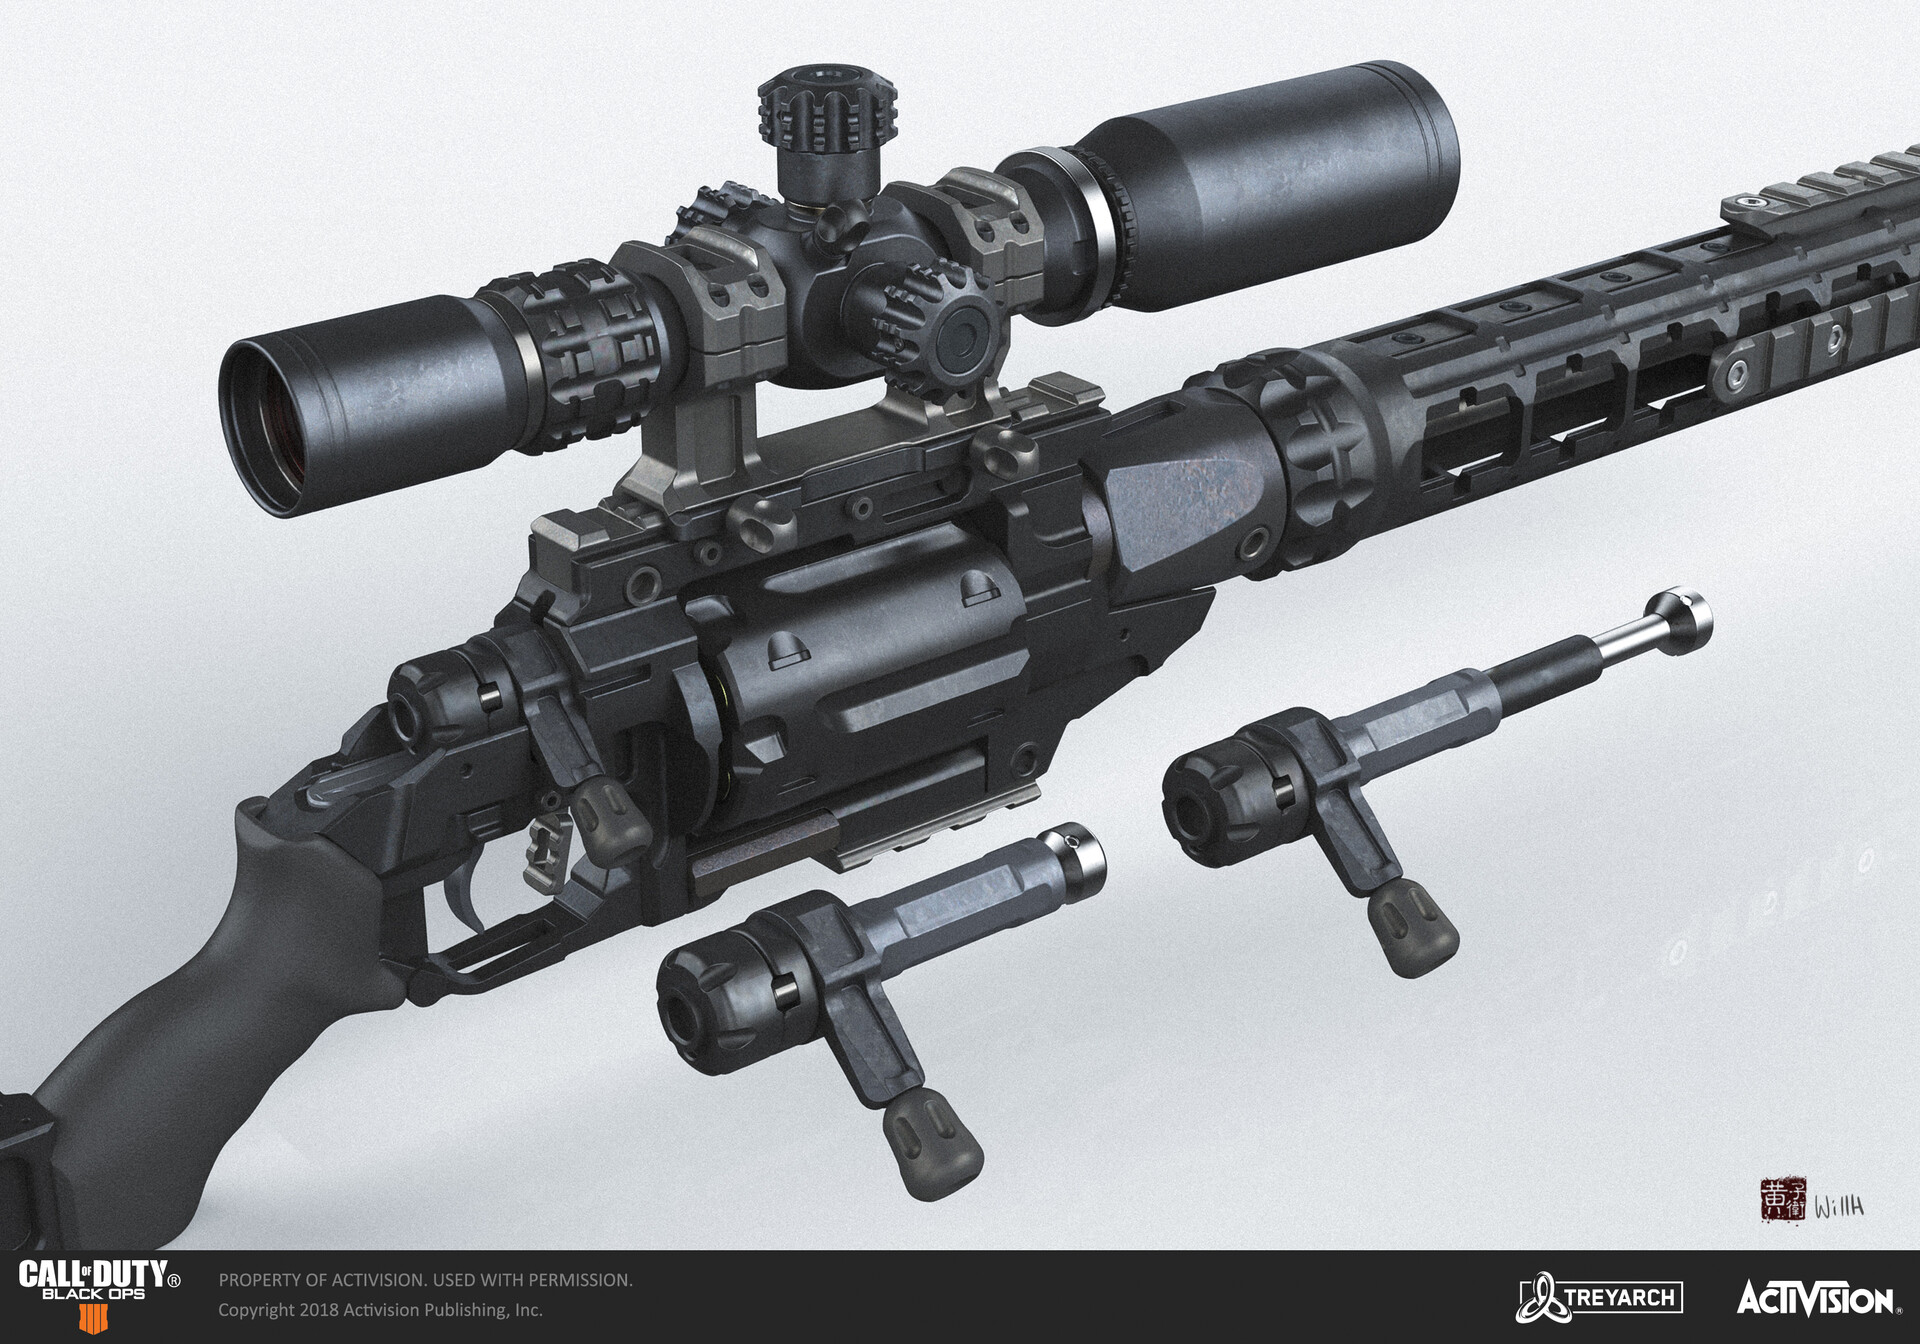 ArtStation - Weapon & Equipment Renders - Call of Duty: Black Ops 4